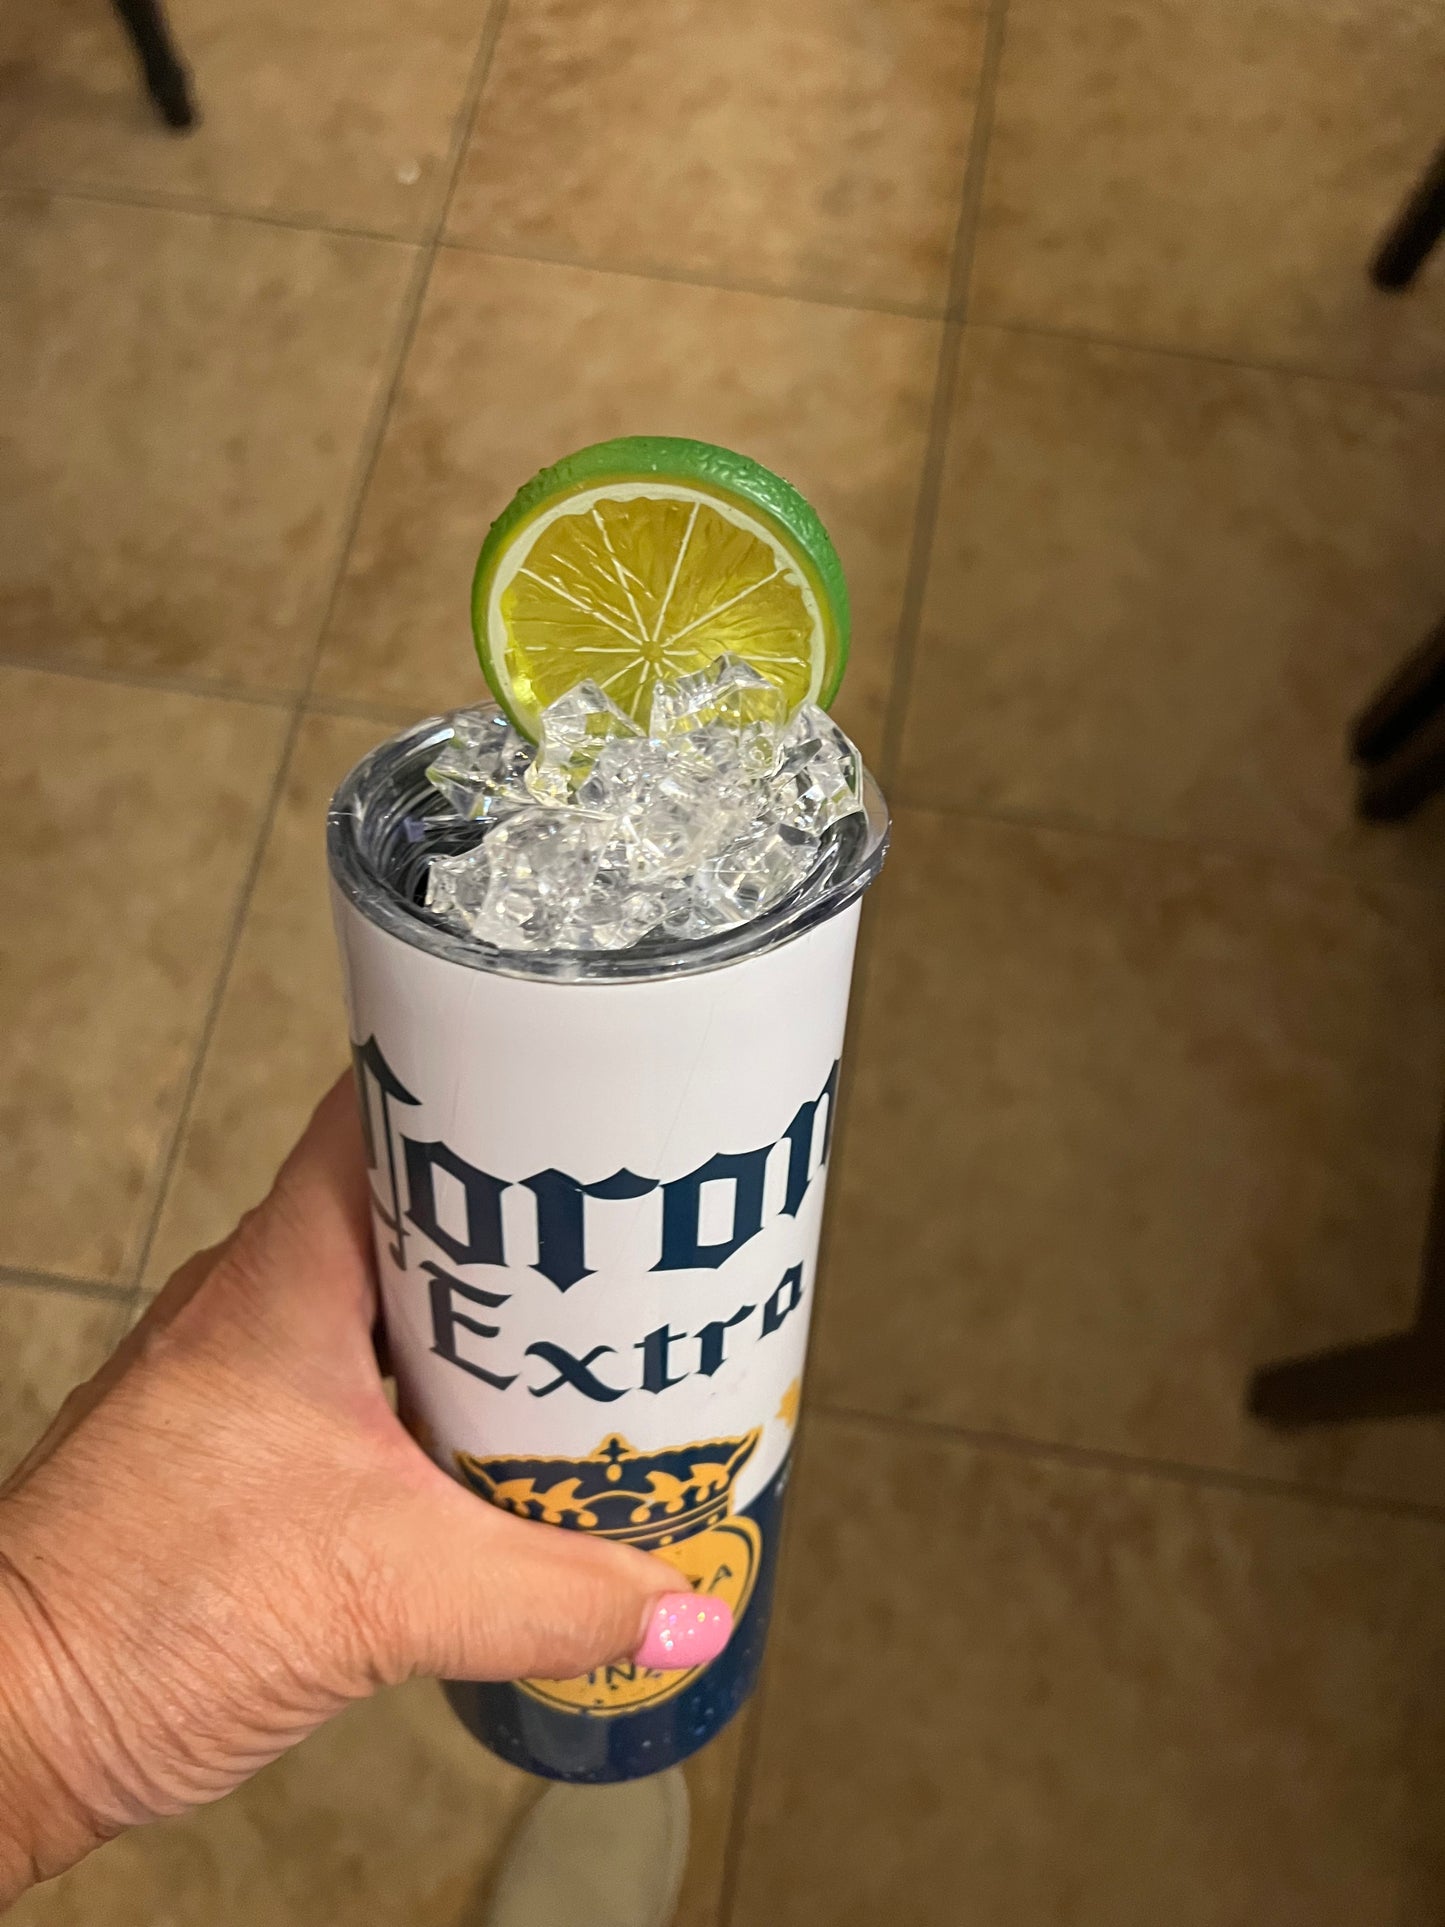 20 oz Tumbler "Corona Extra" with ice/lime plastic lid